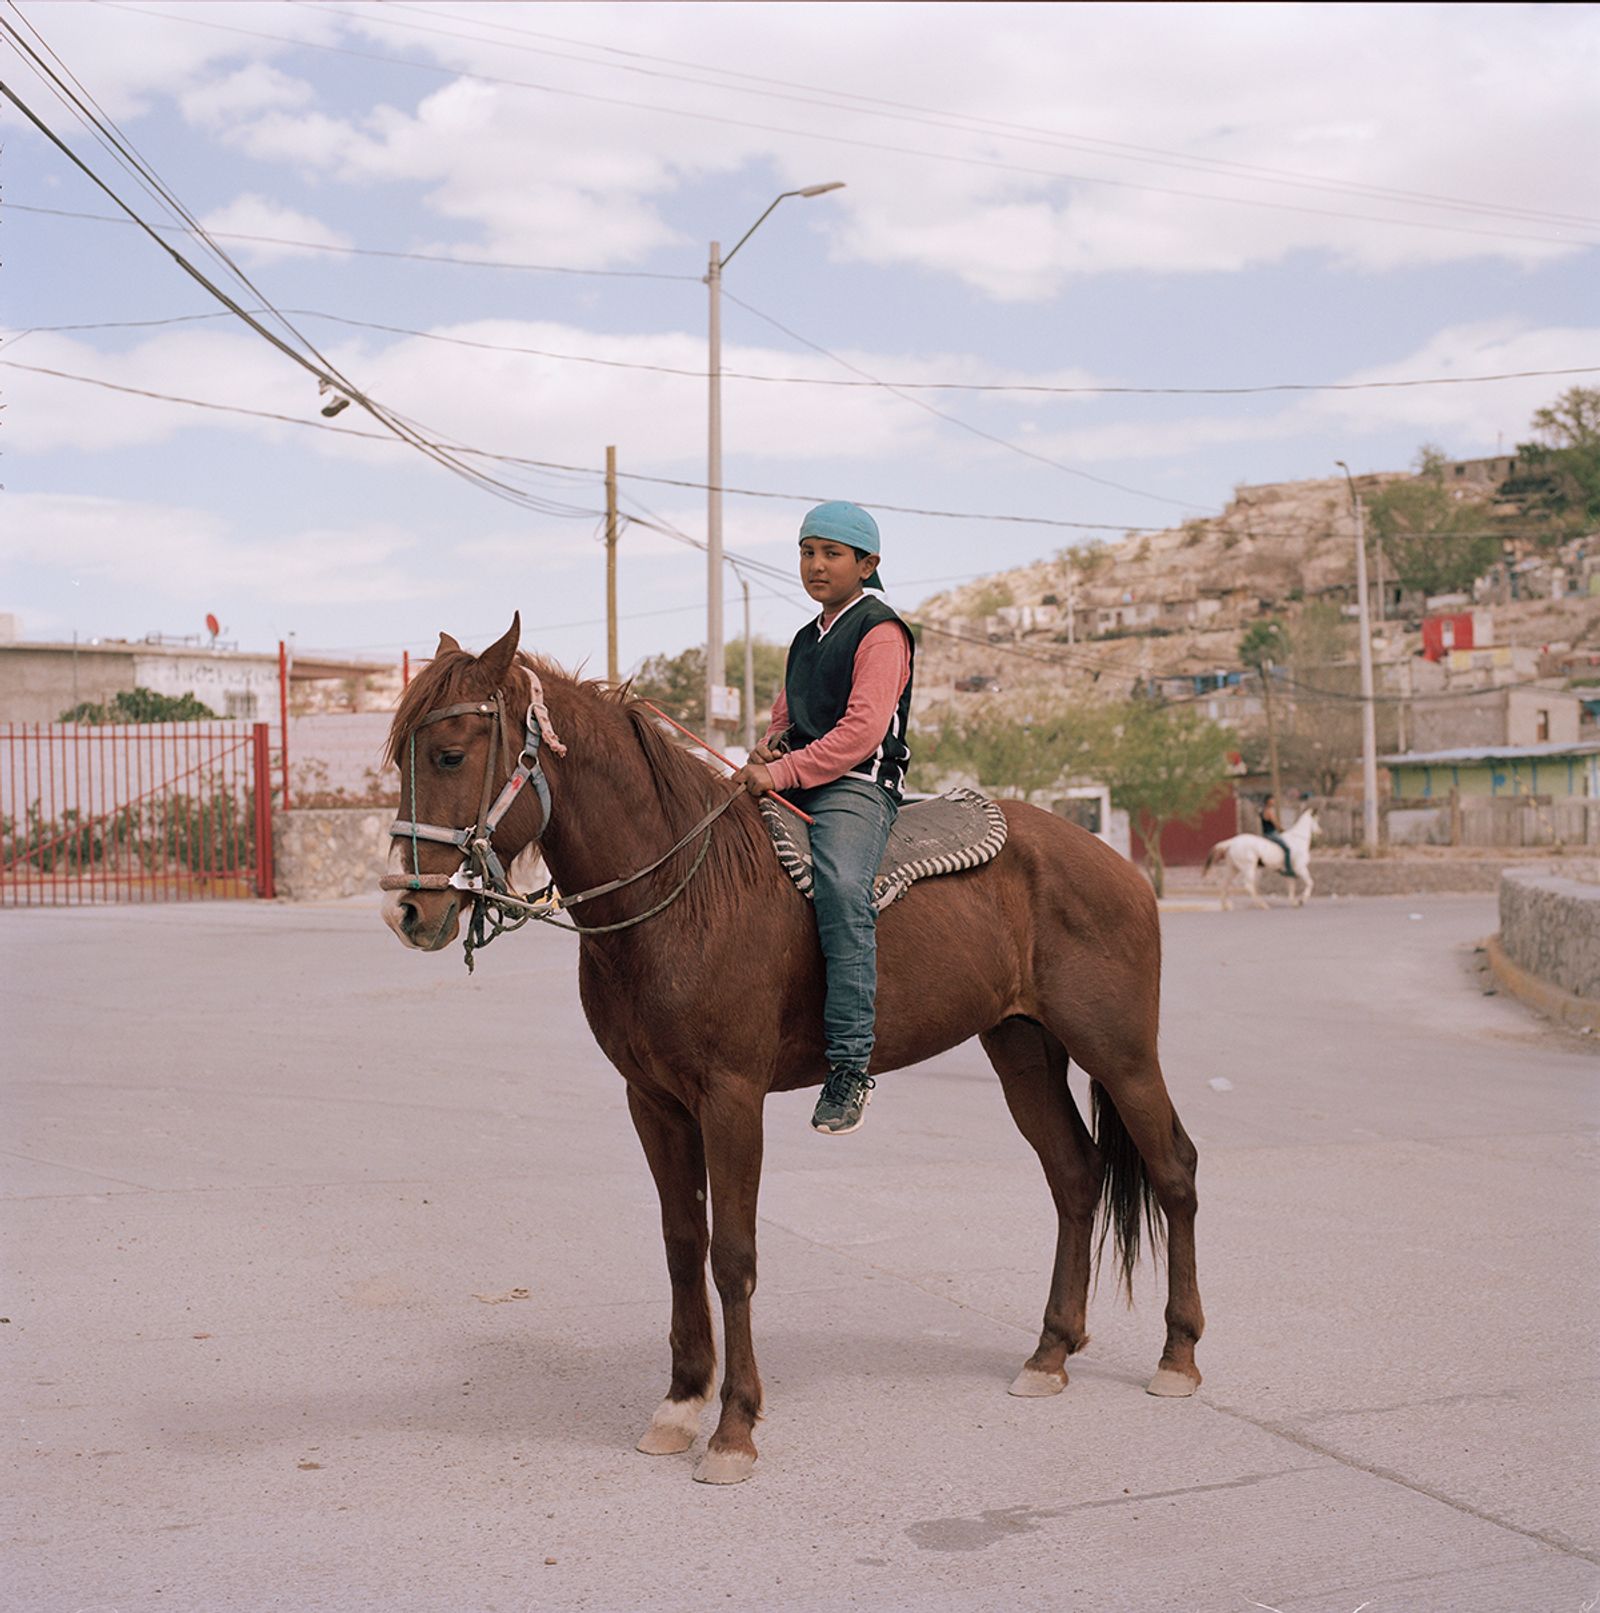 © Jordi Ruiz Cirera - A young boy on a horse at La Paz neighbourhood in Ciudad Juarez.